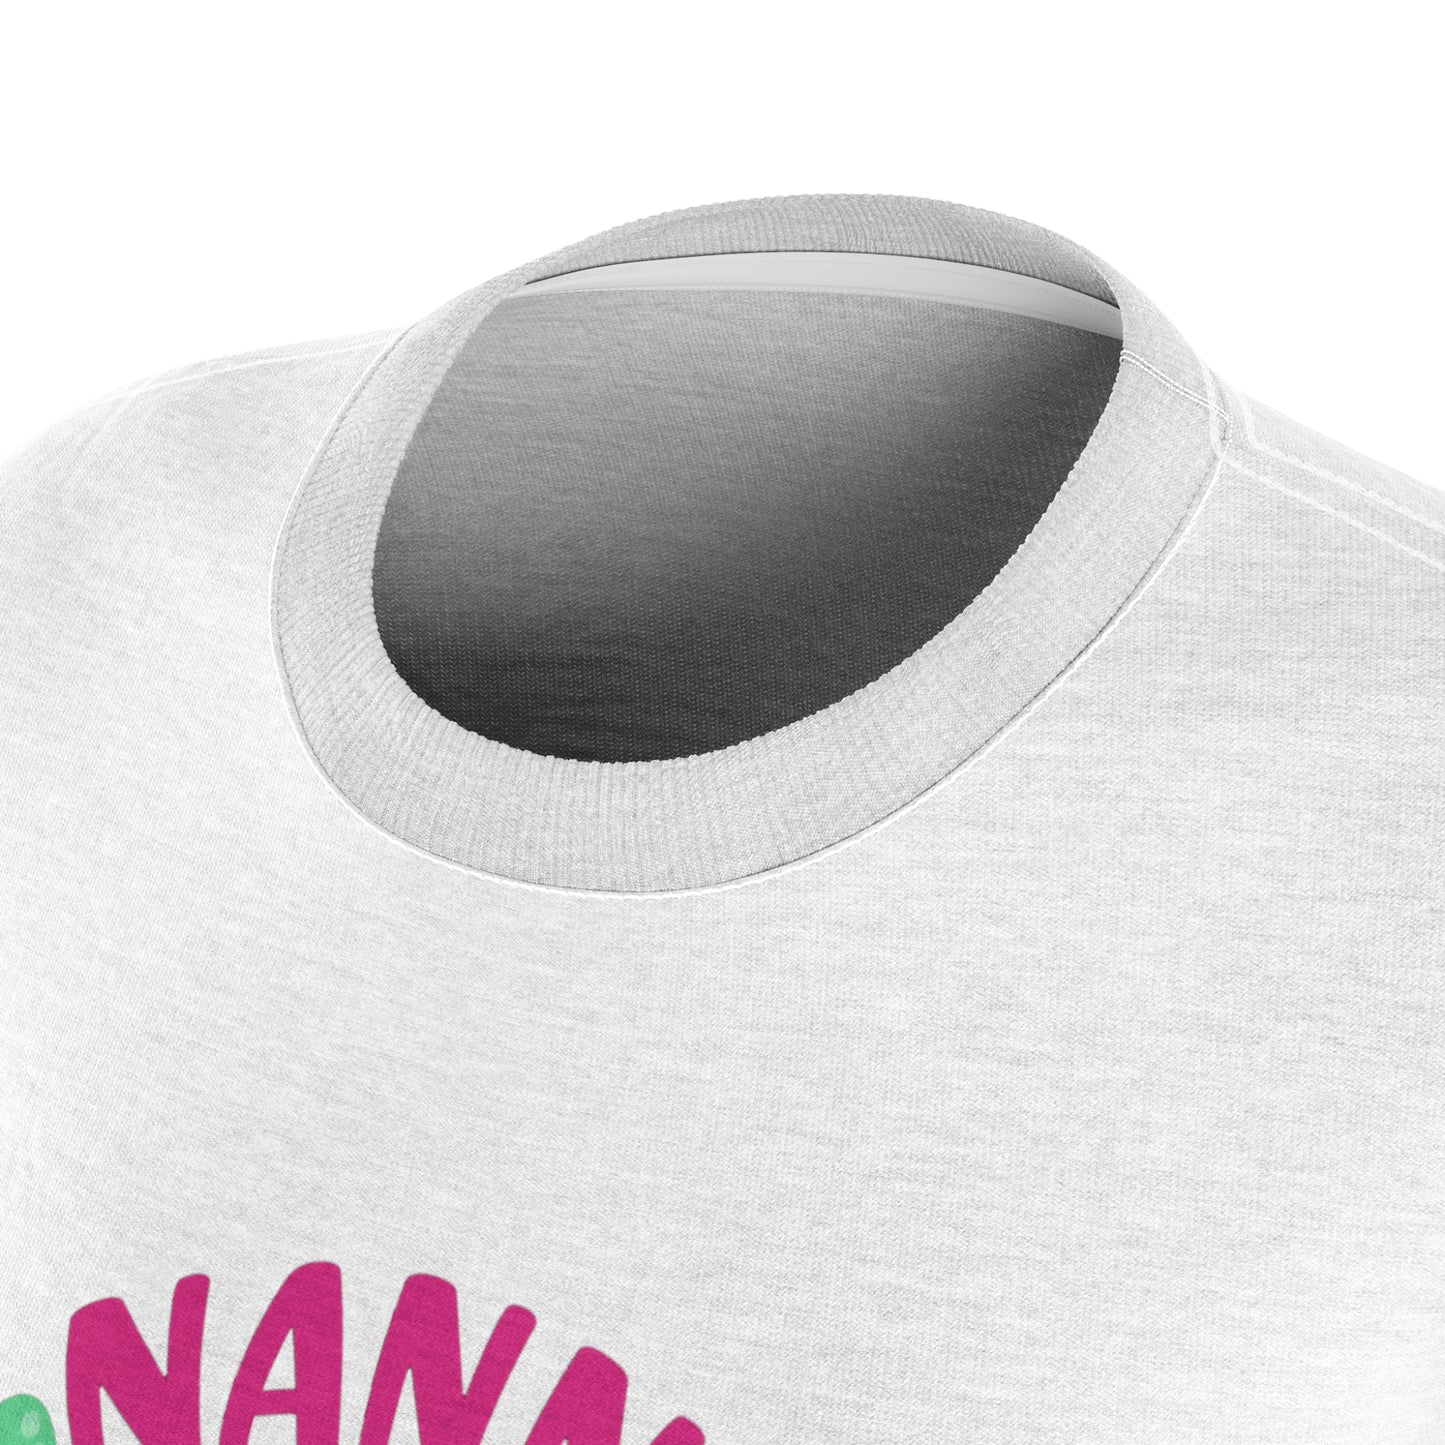 Nanny of the Birthday Girl - Cut & Sew Tee (AOP)